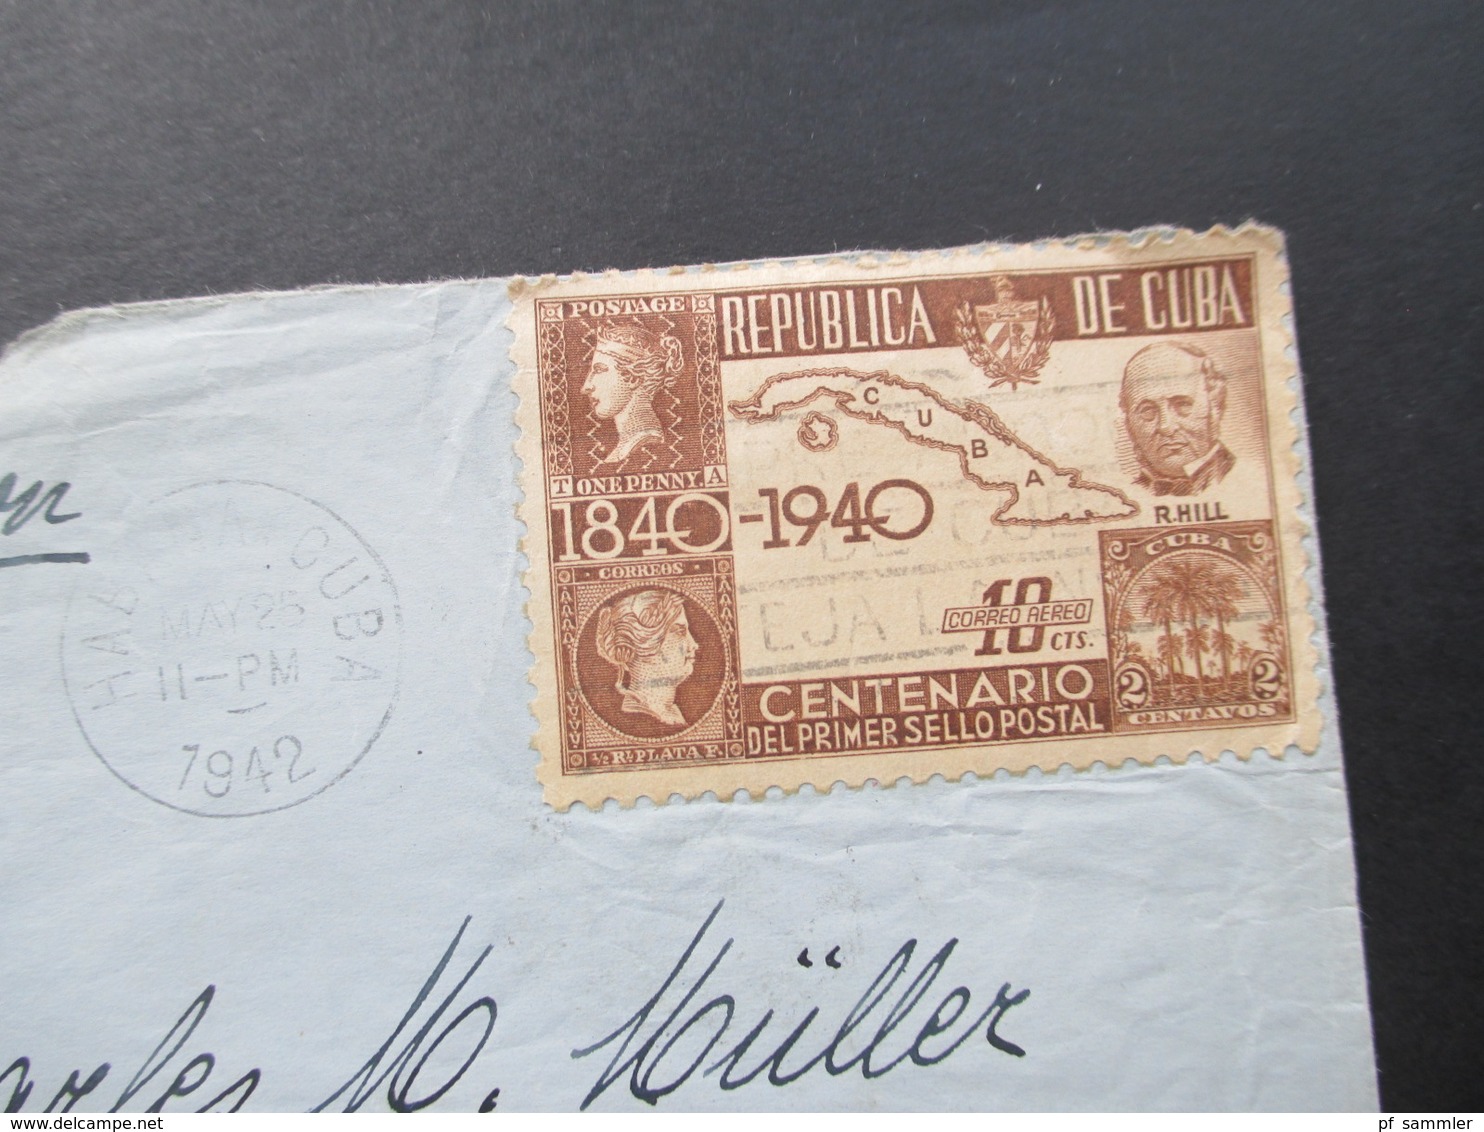 Zensurbeleg Kuba / Cuba 1942 Air Mail / Luftpost Nach New York. Examined By 3930 - Lettres & Documents